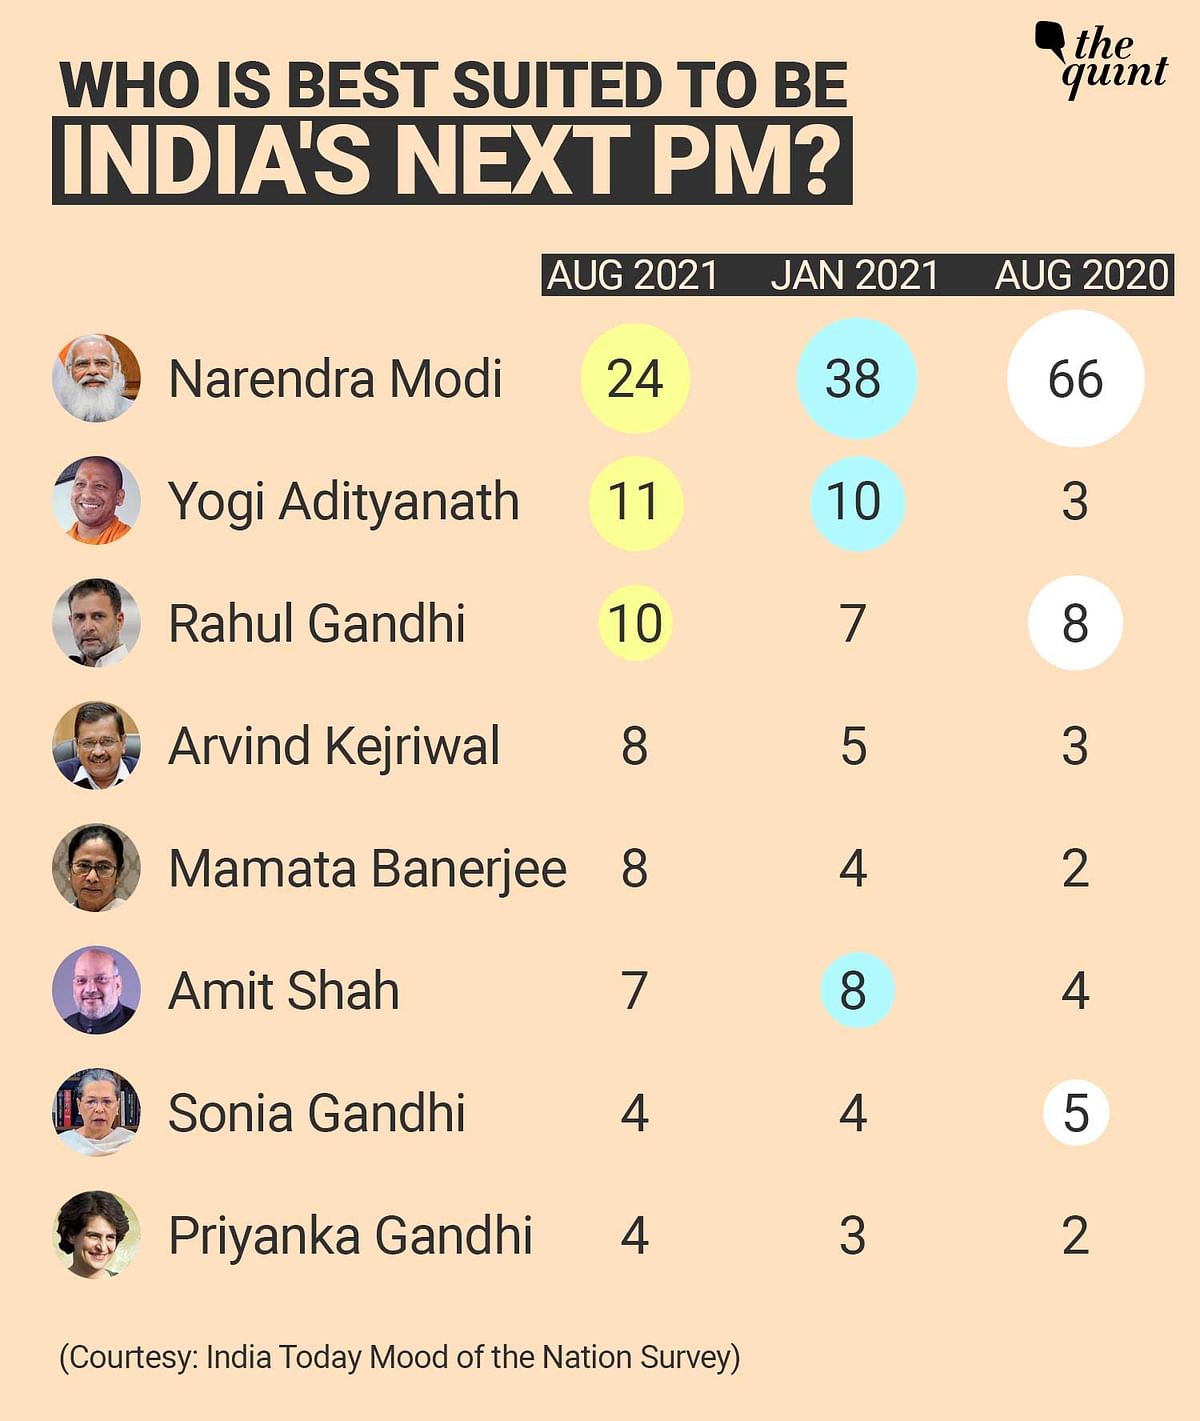 Is the India Today survey underestimating PM Modi and overestimating Yogi Adityanath?